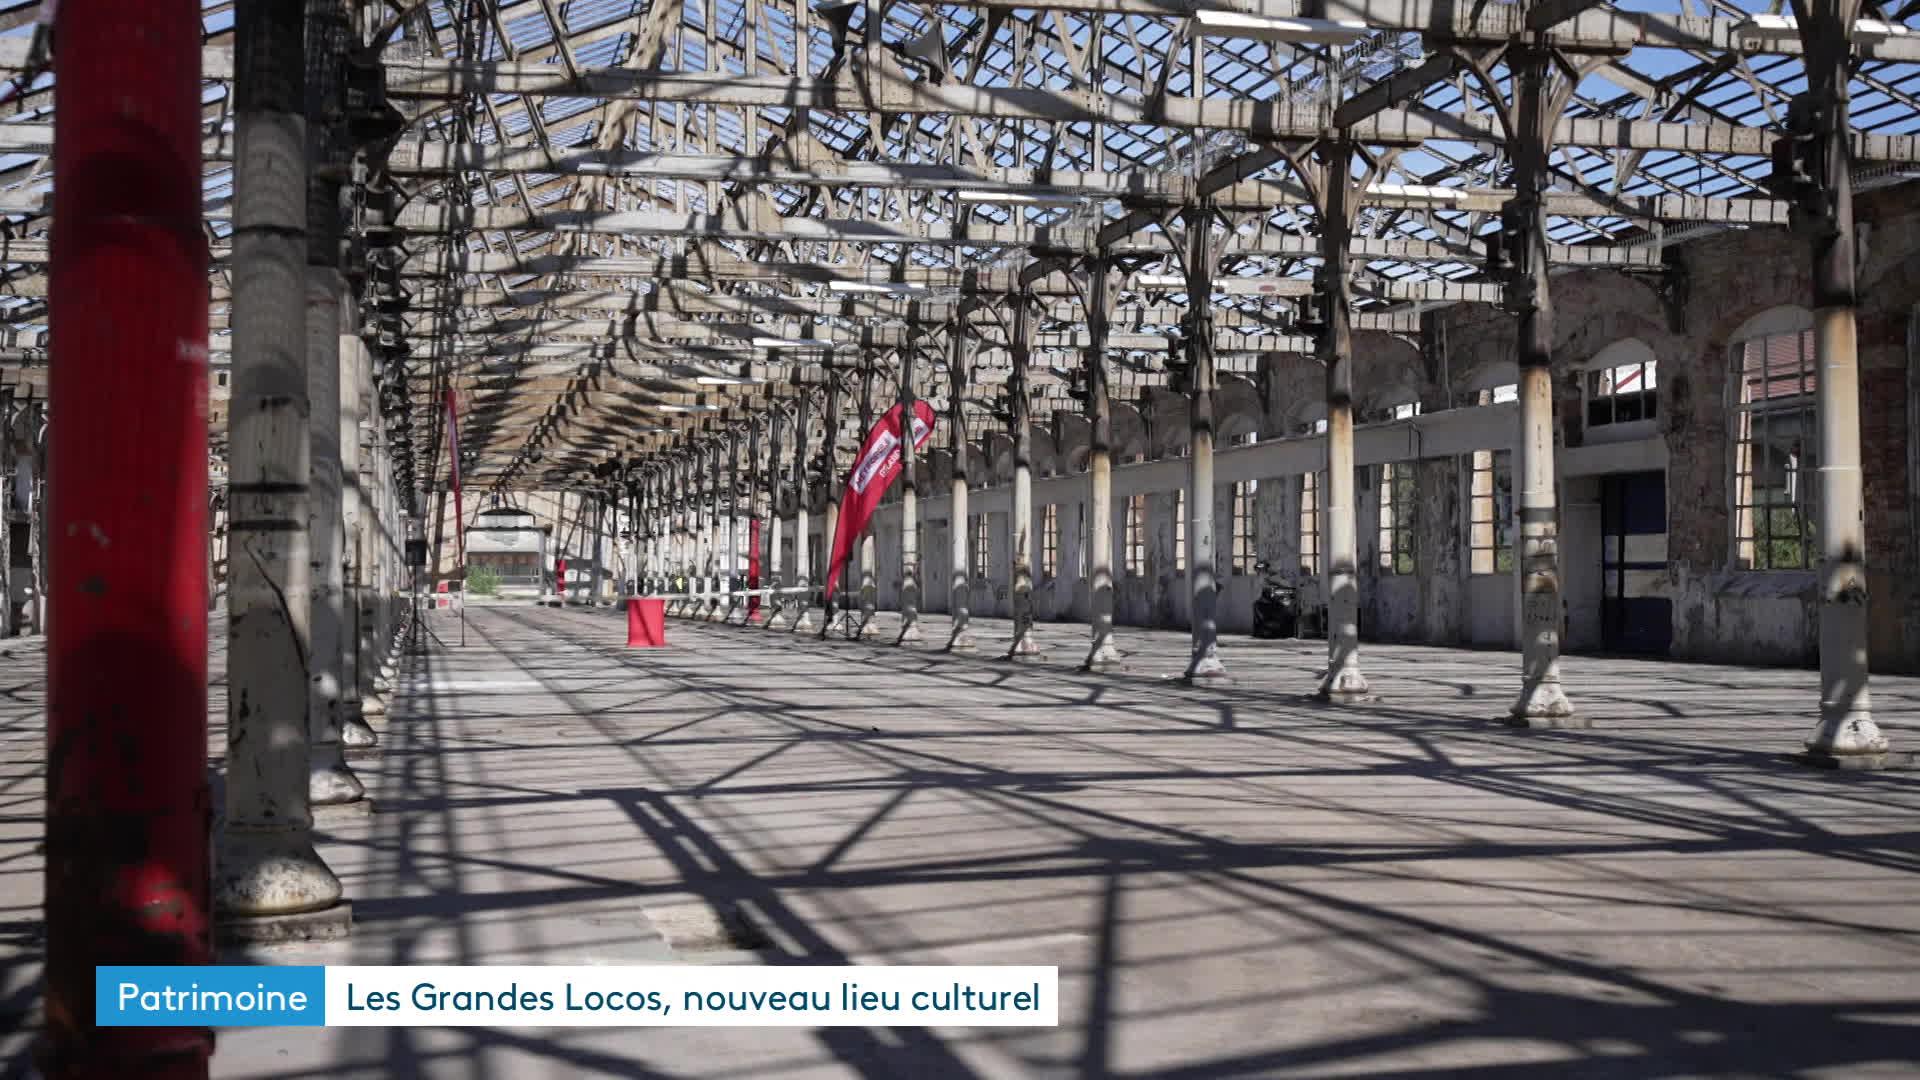 Three Lyon festivals installed in an SNCF wasteland